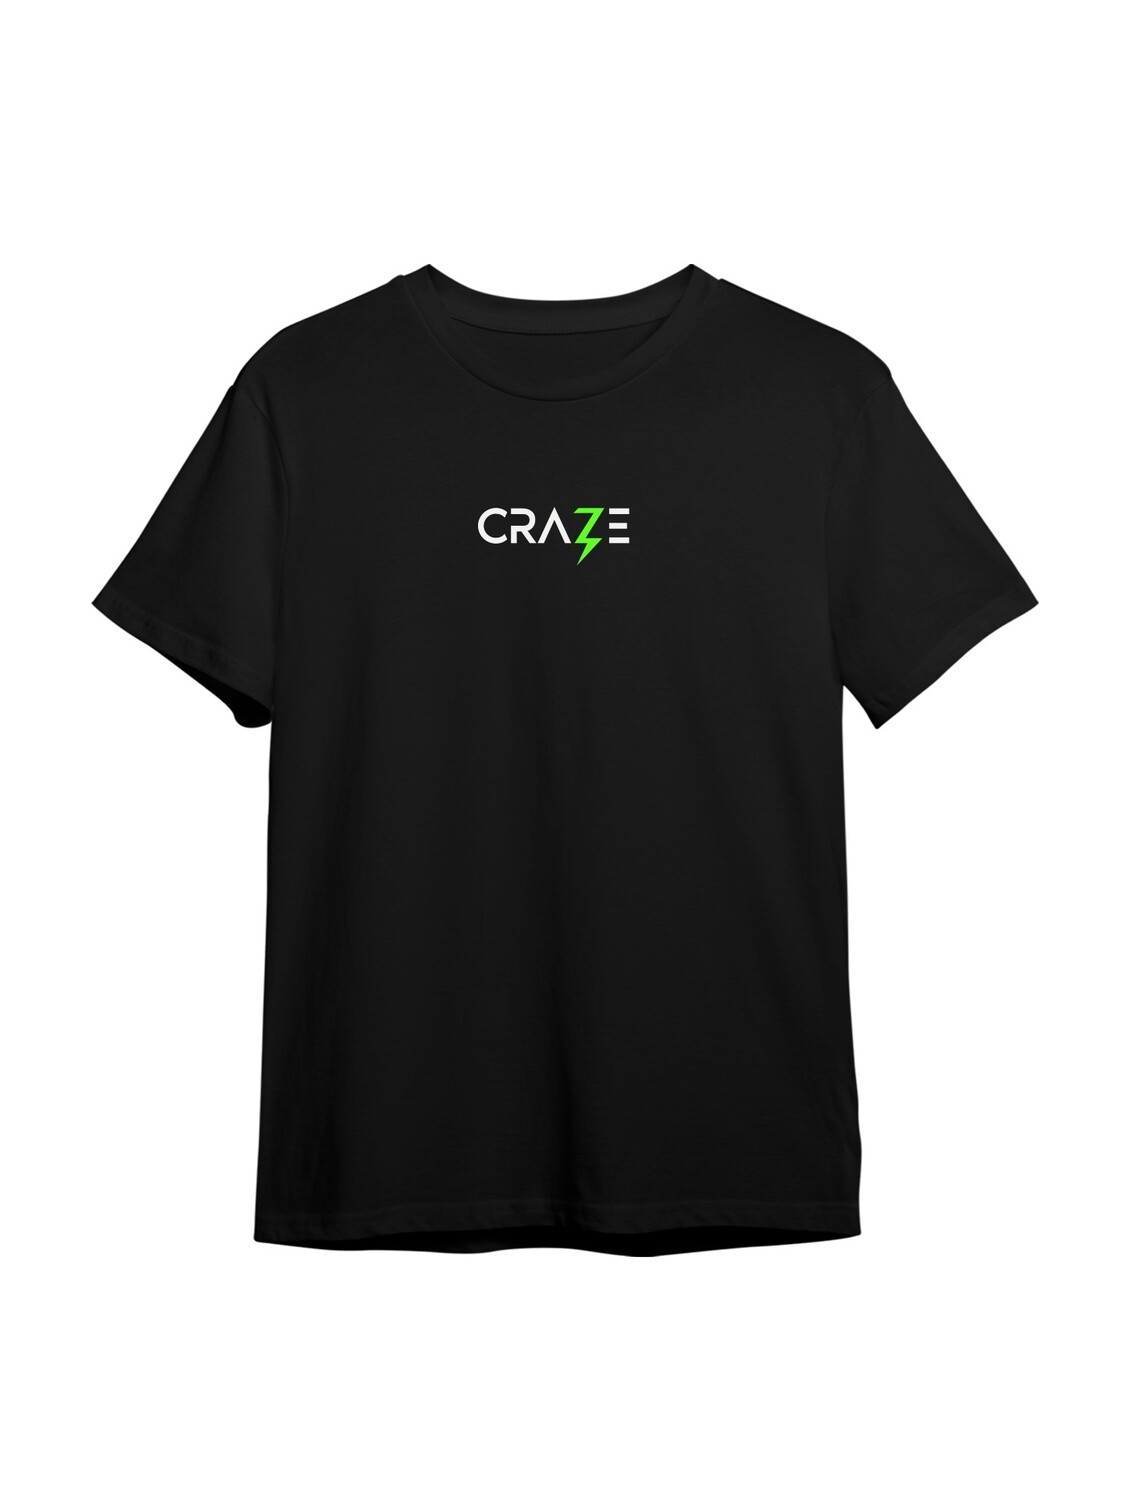 T-shirt CRAZE Neon by Farfadet, Colour: Black, Size: X-small